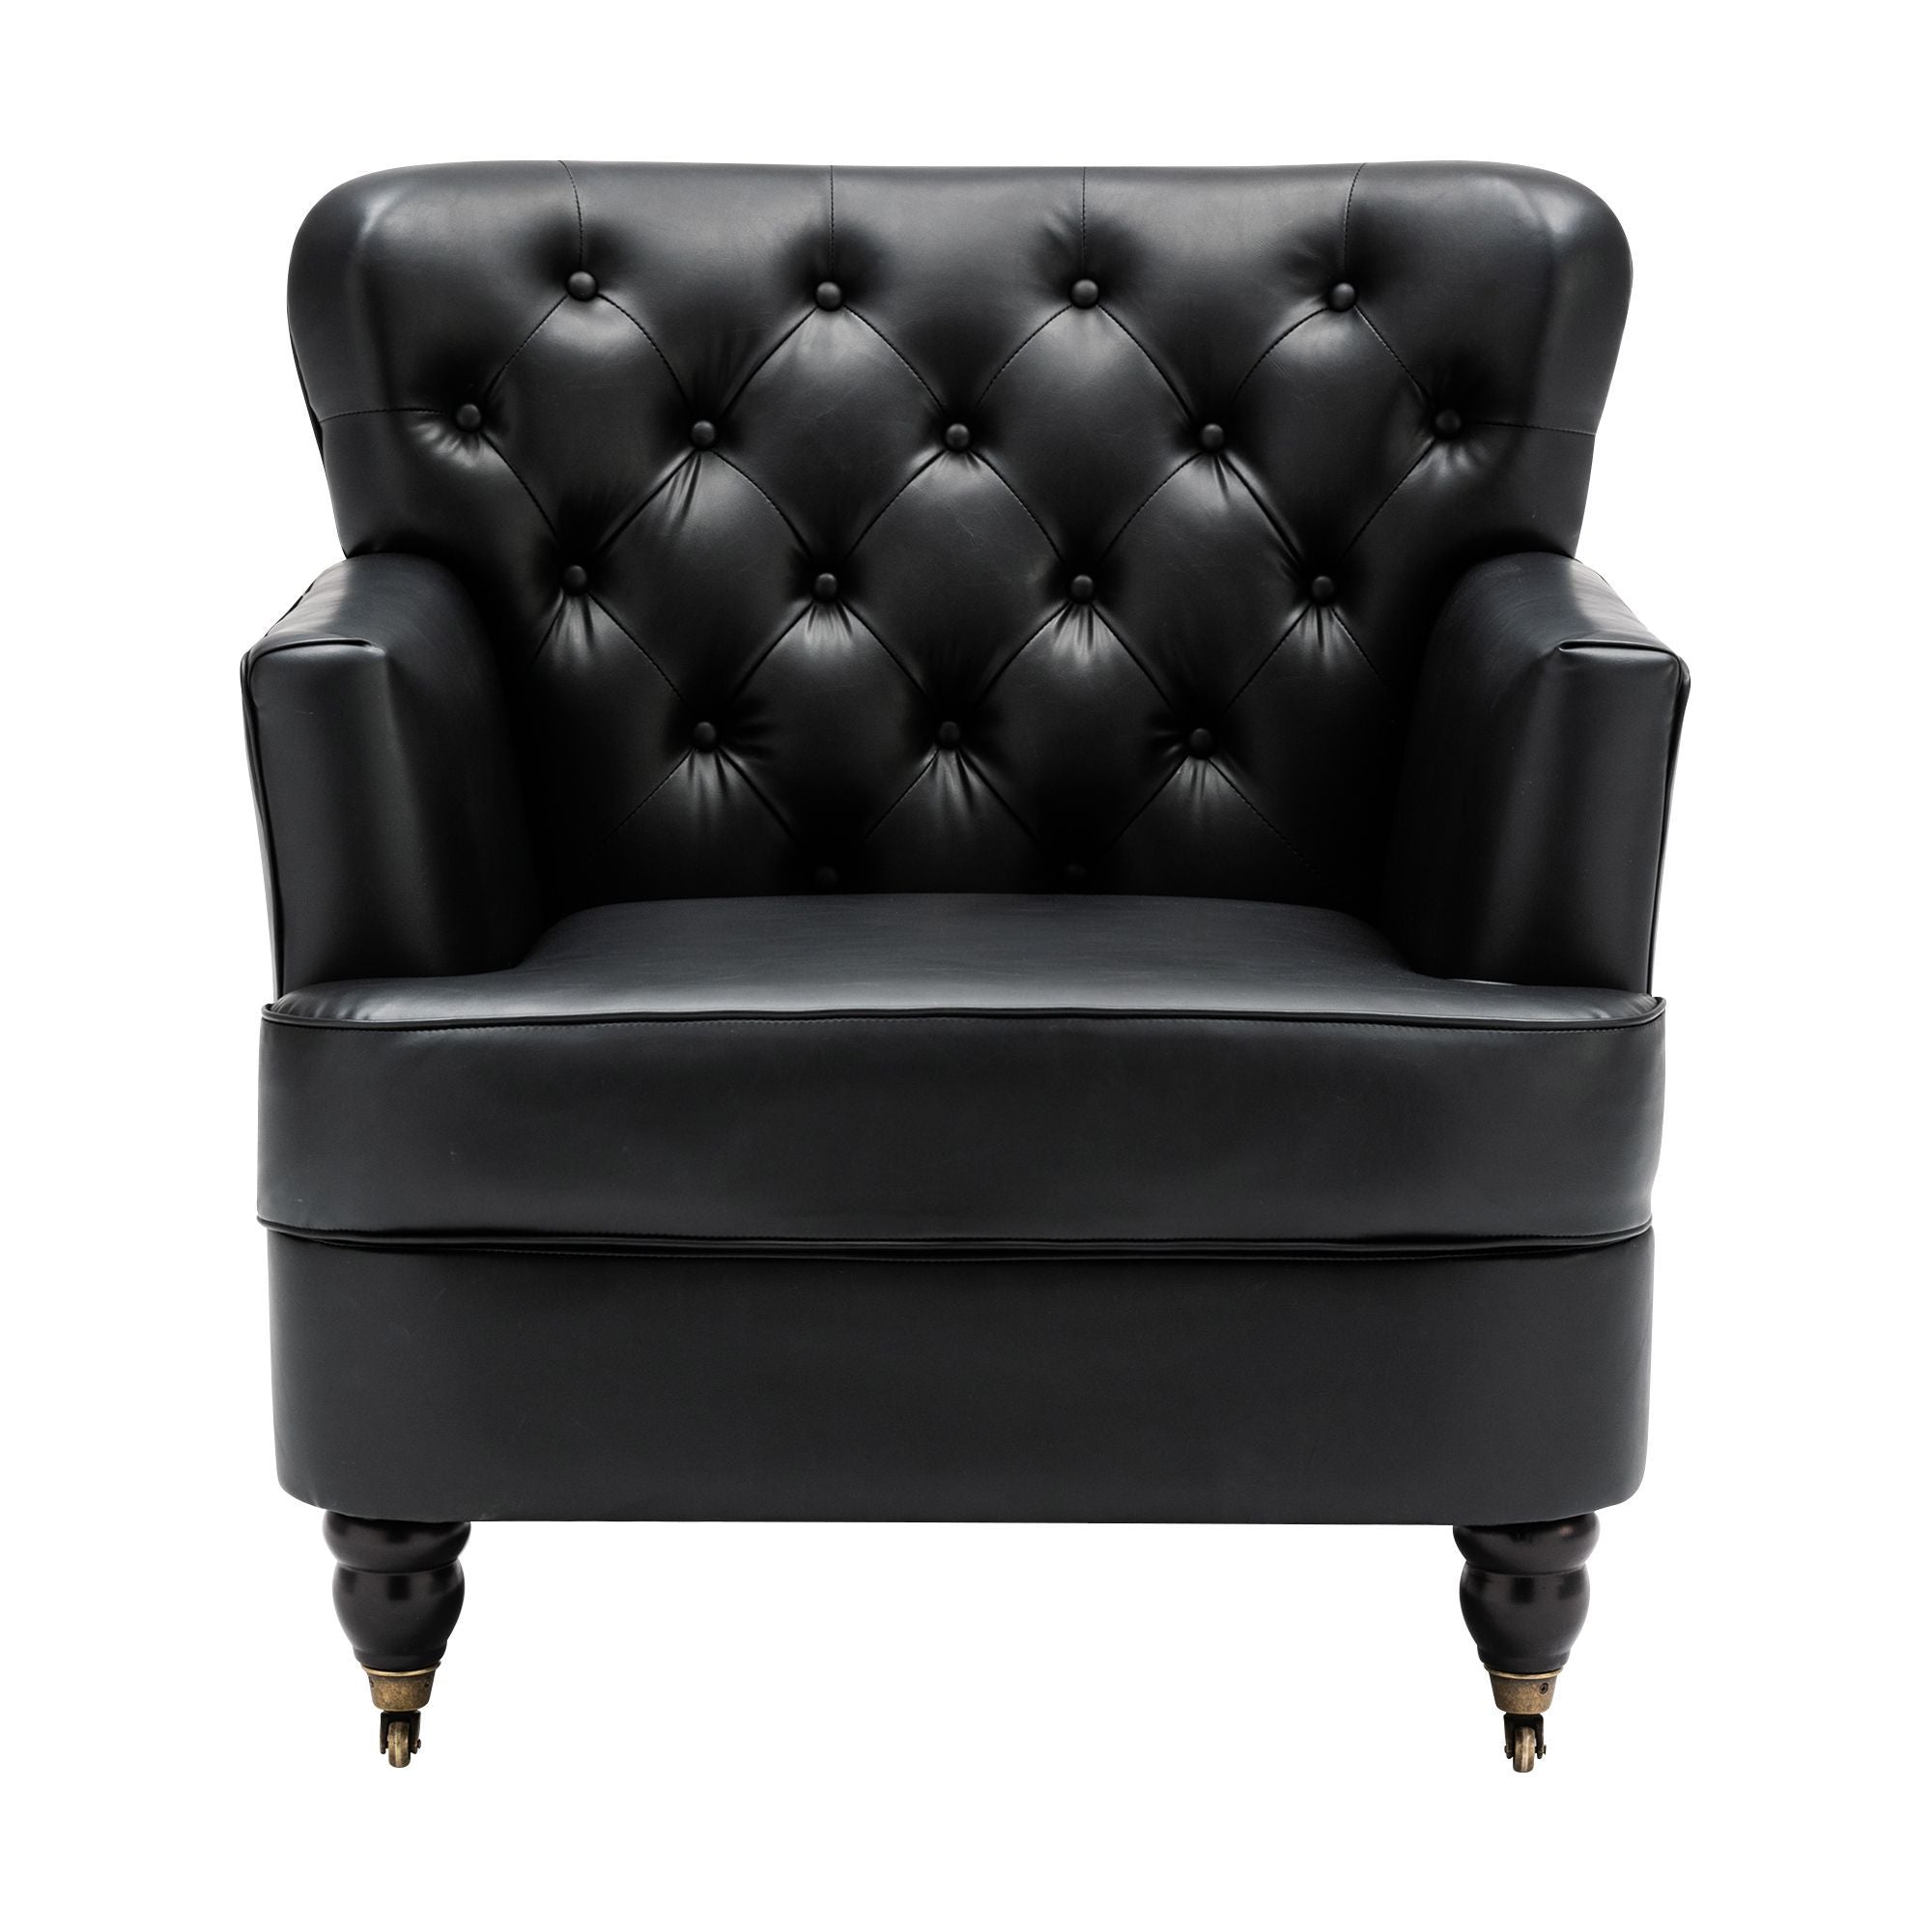 PU leather club chair, black-Boyel Living